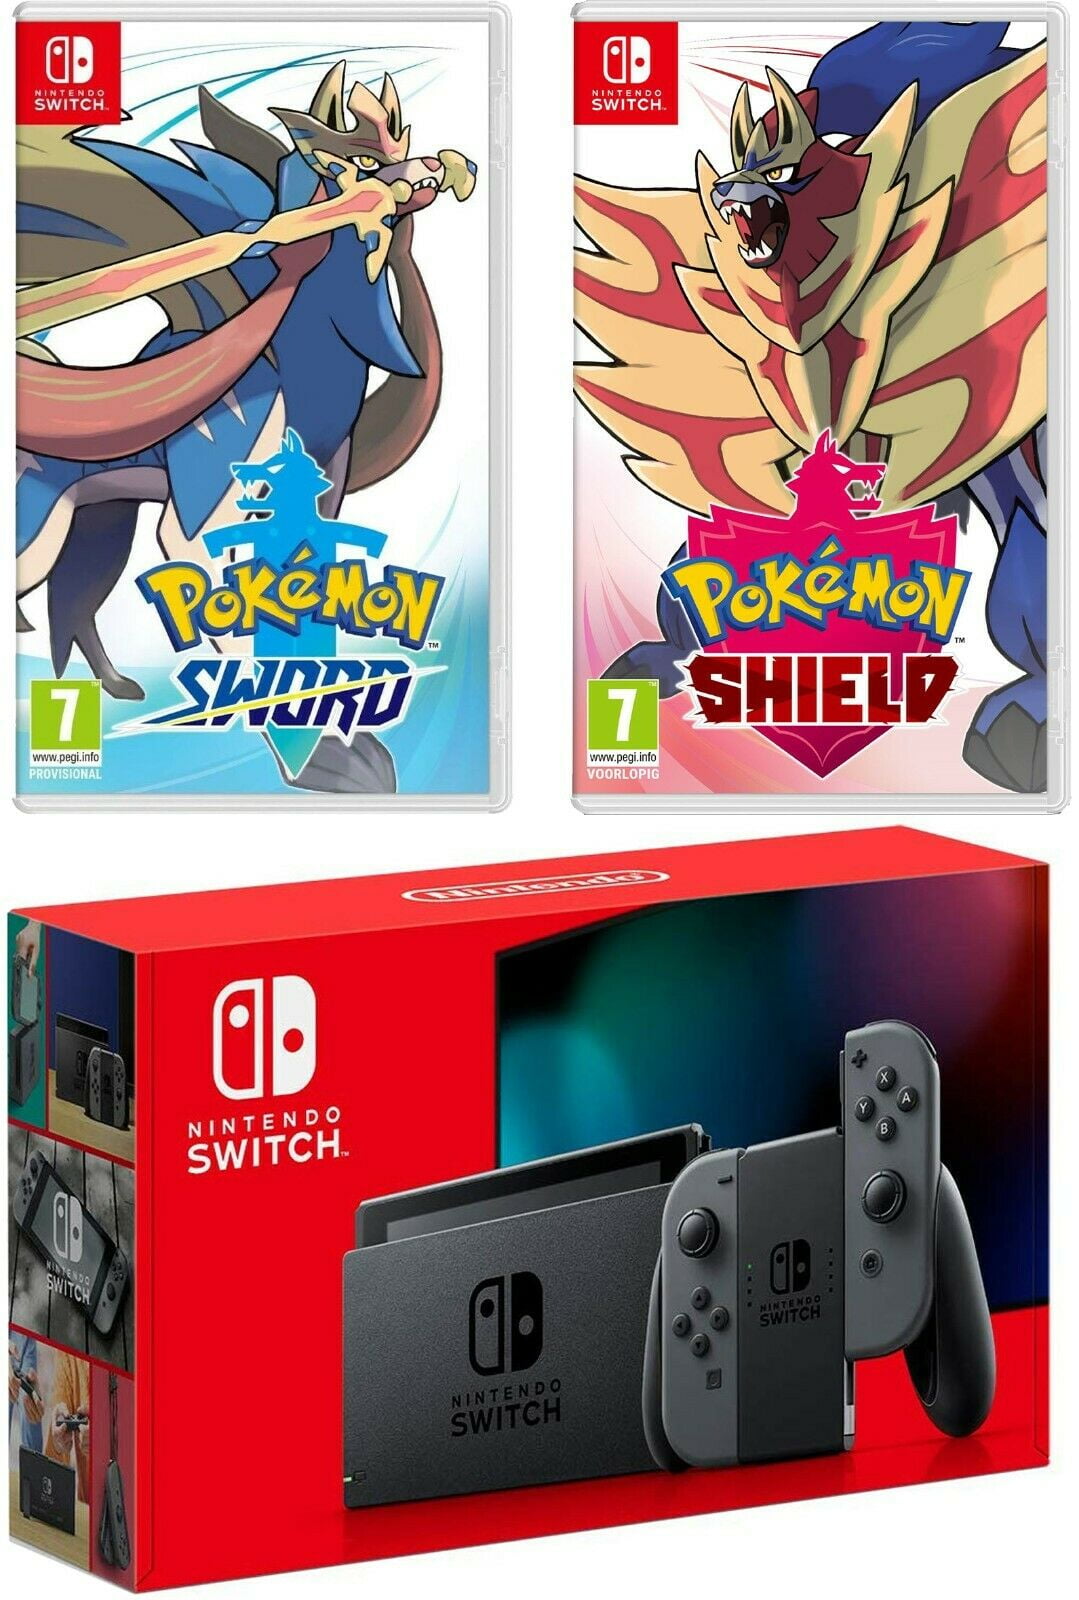 Nintendo Switch Gray Console New 19 Version With Pokemon Sword And Shield Bundle Walmart Com Walmart Com